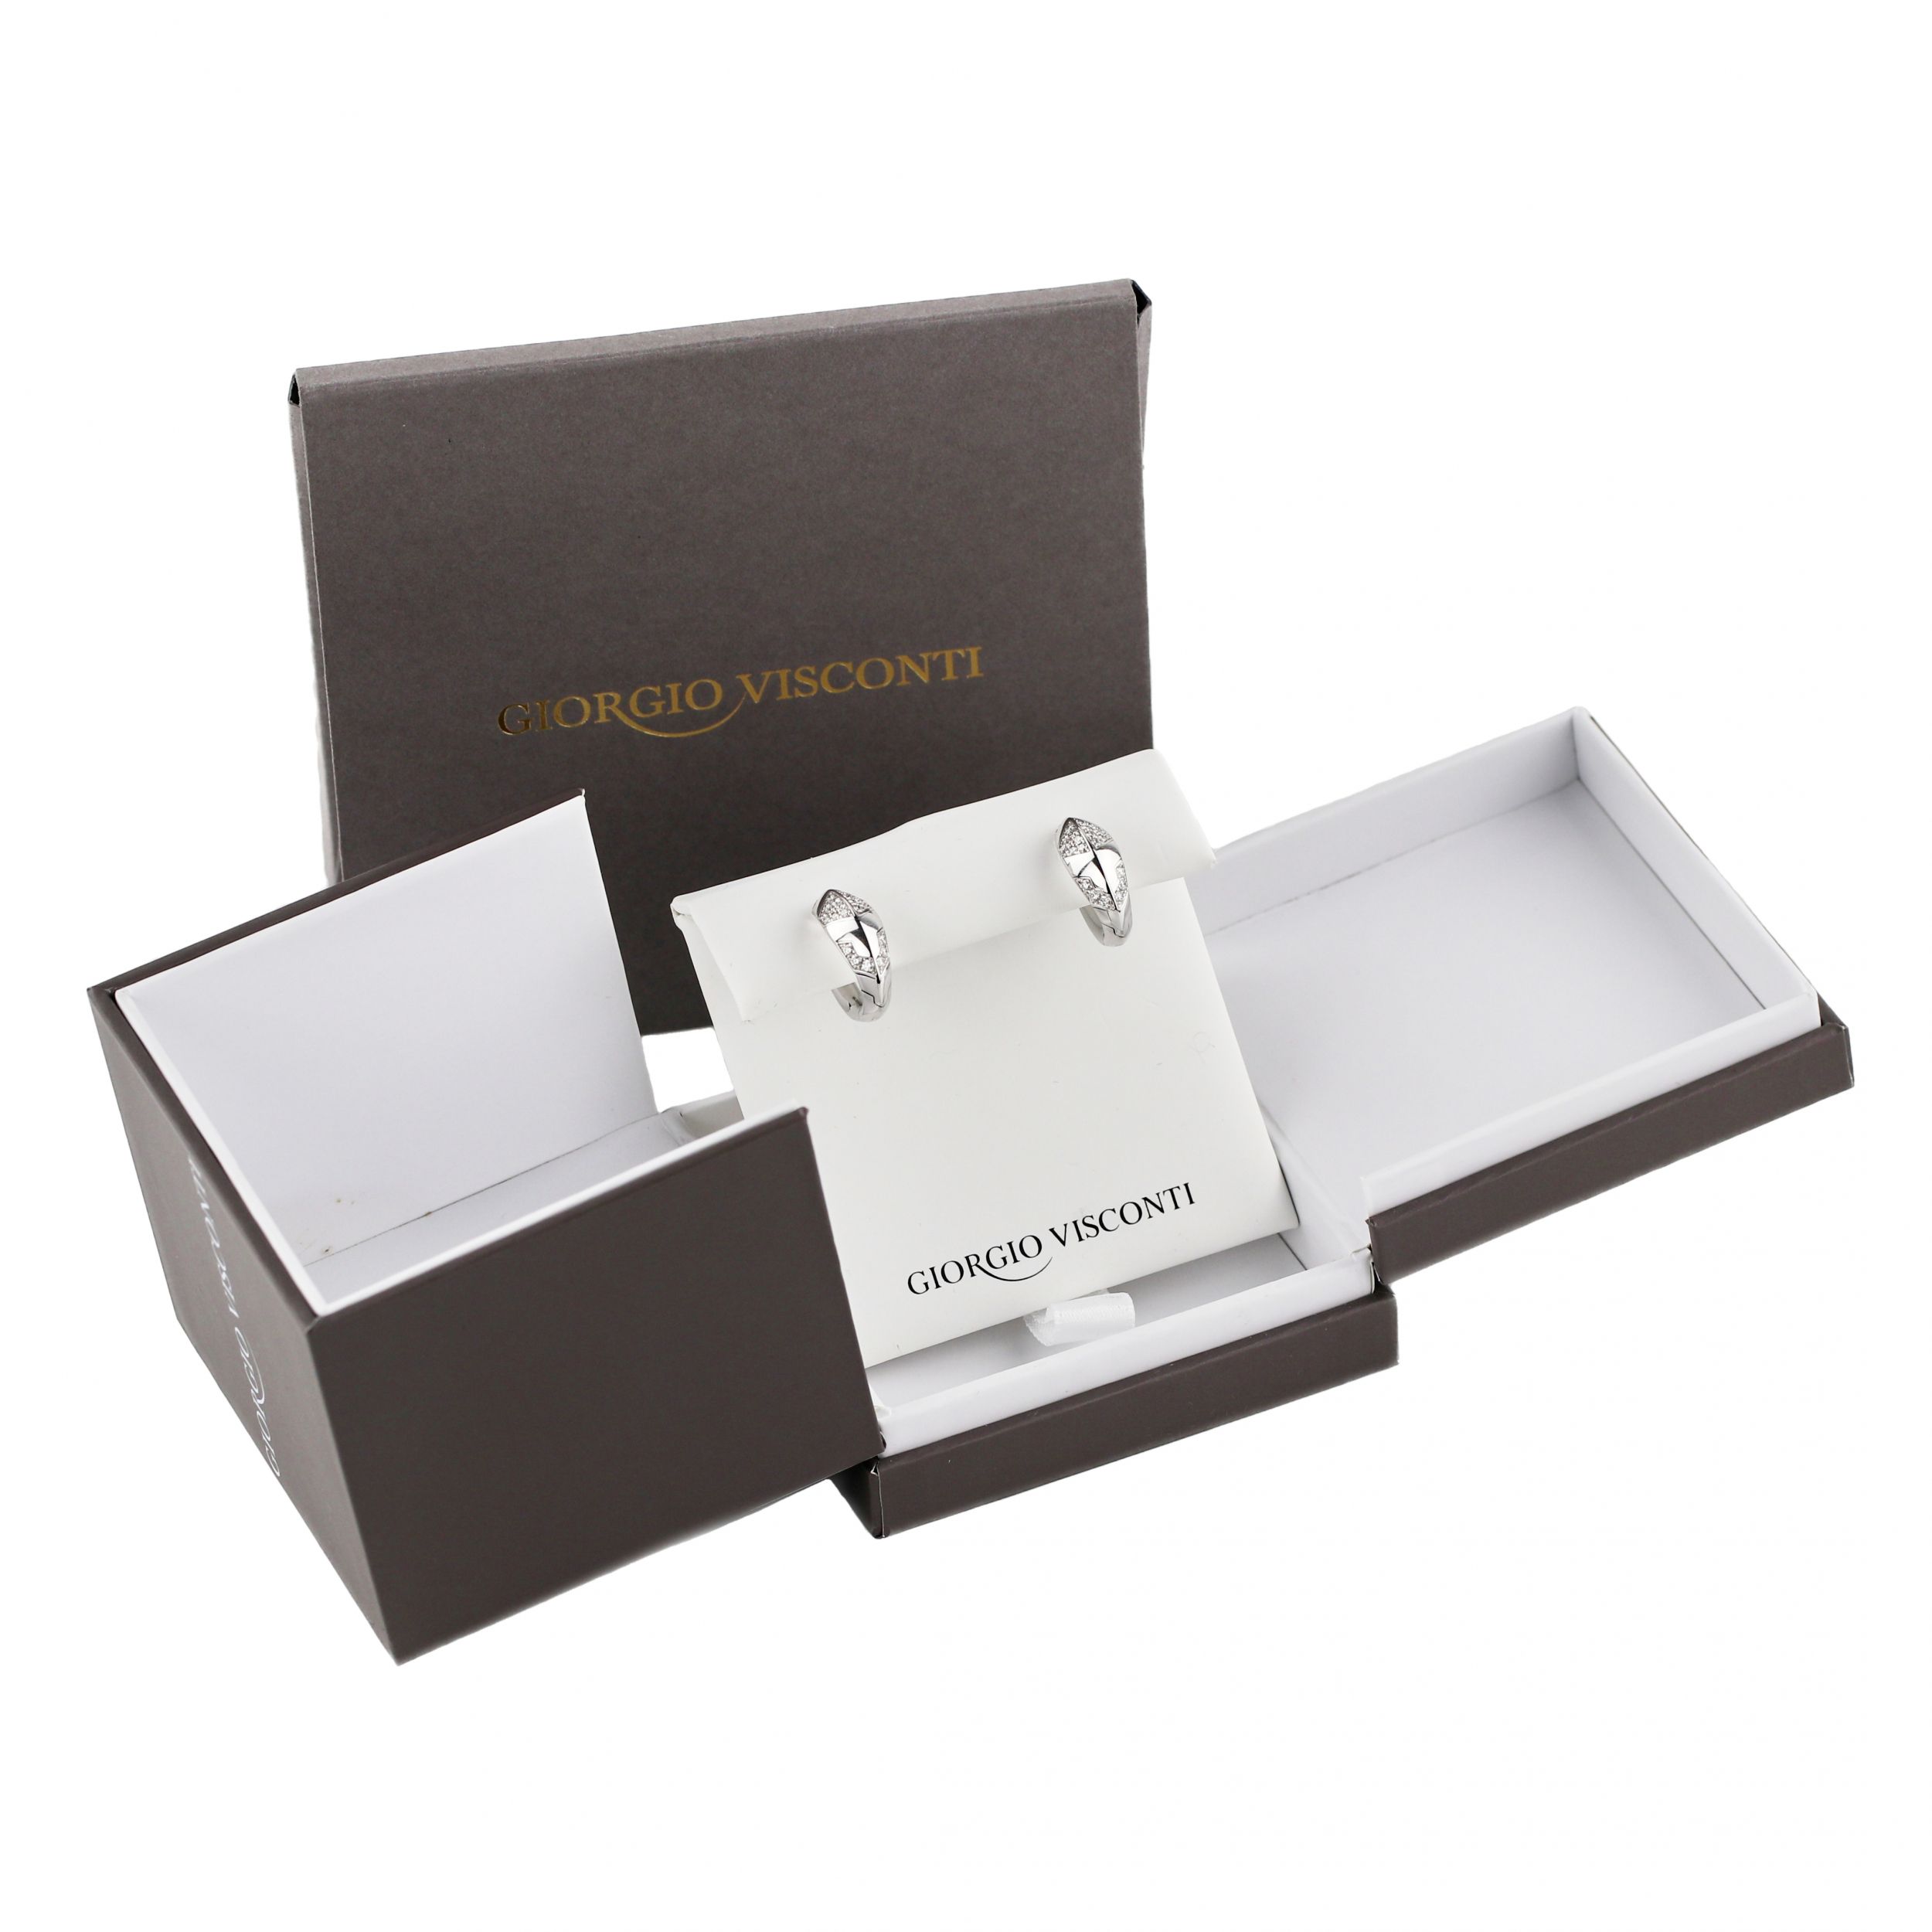 Giorgio-Visconti-white-gold-earrings-with-diamonds-